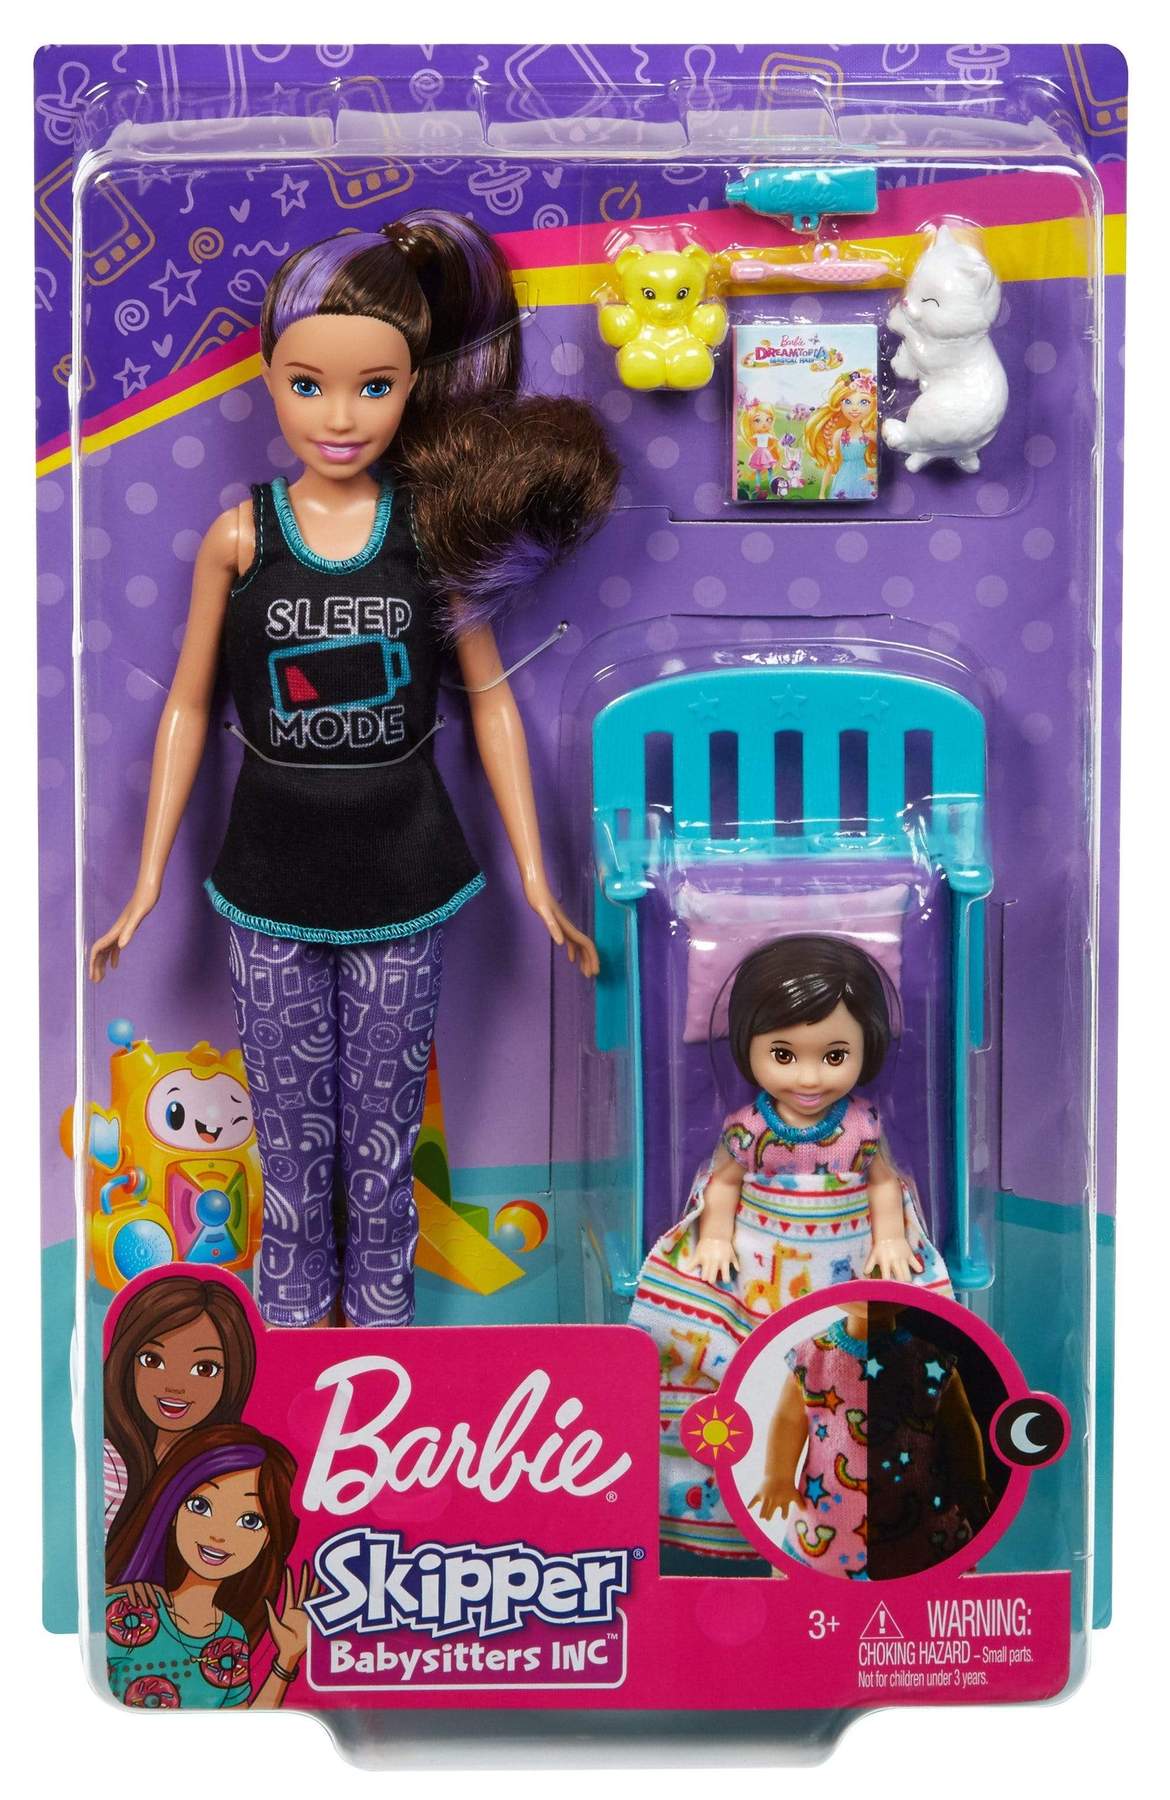 Barbie: Skipper Babysitters Inc